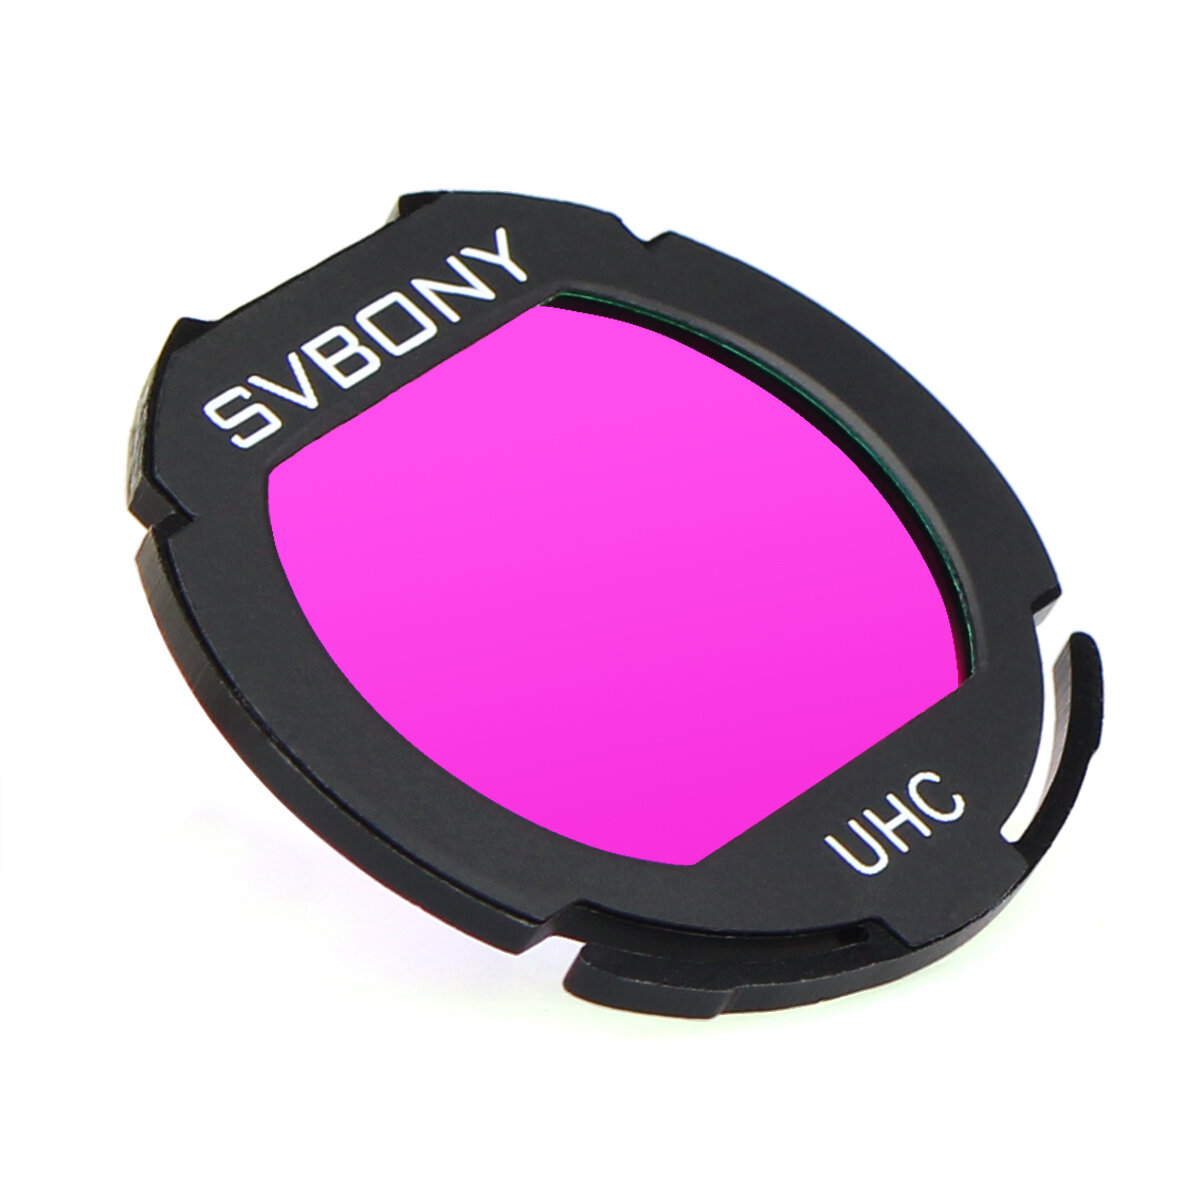 SVBONY UHC EOS Clipfilter Filter met ultrahoog contrast voor CCD-cameras en DSLR